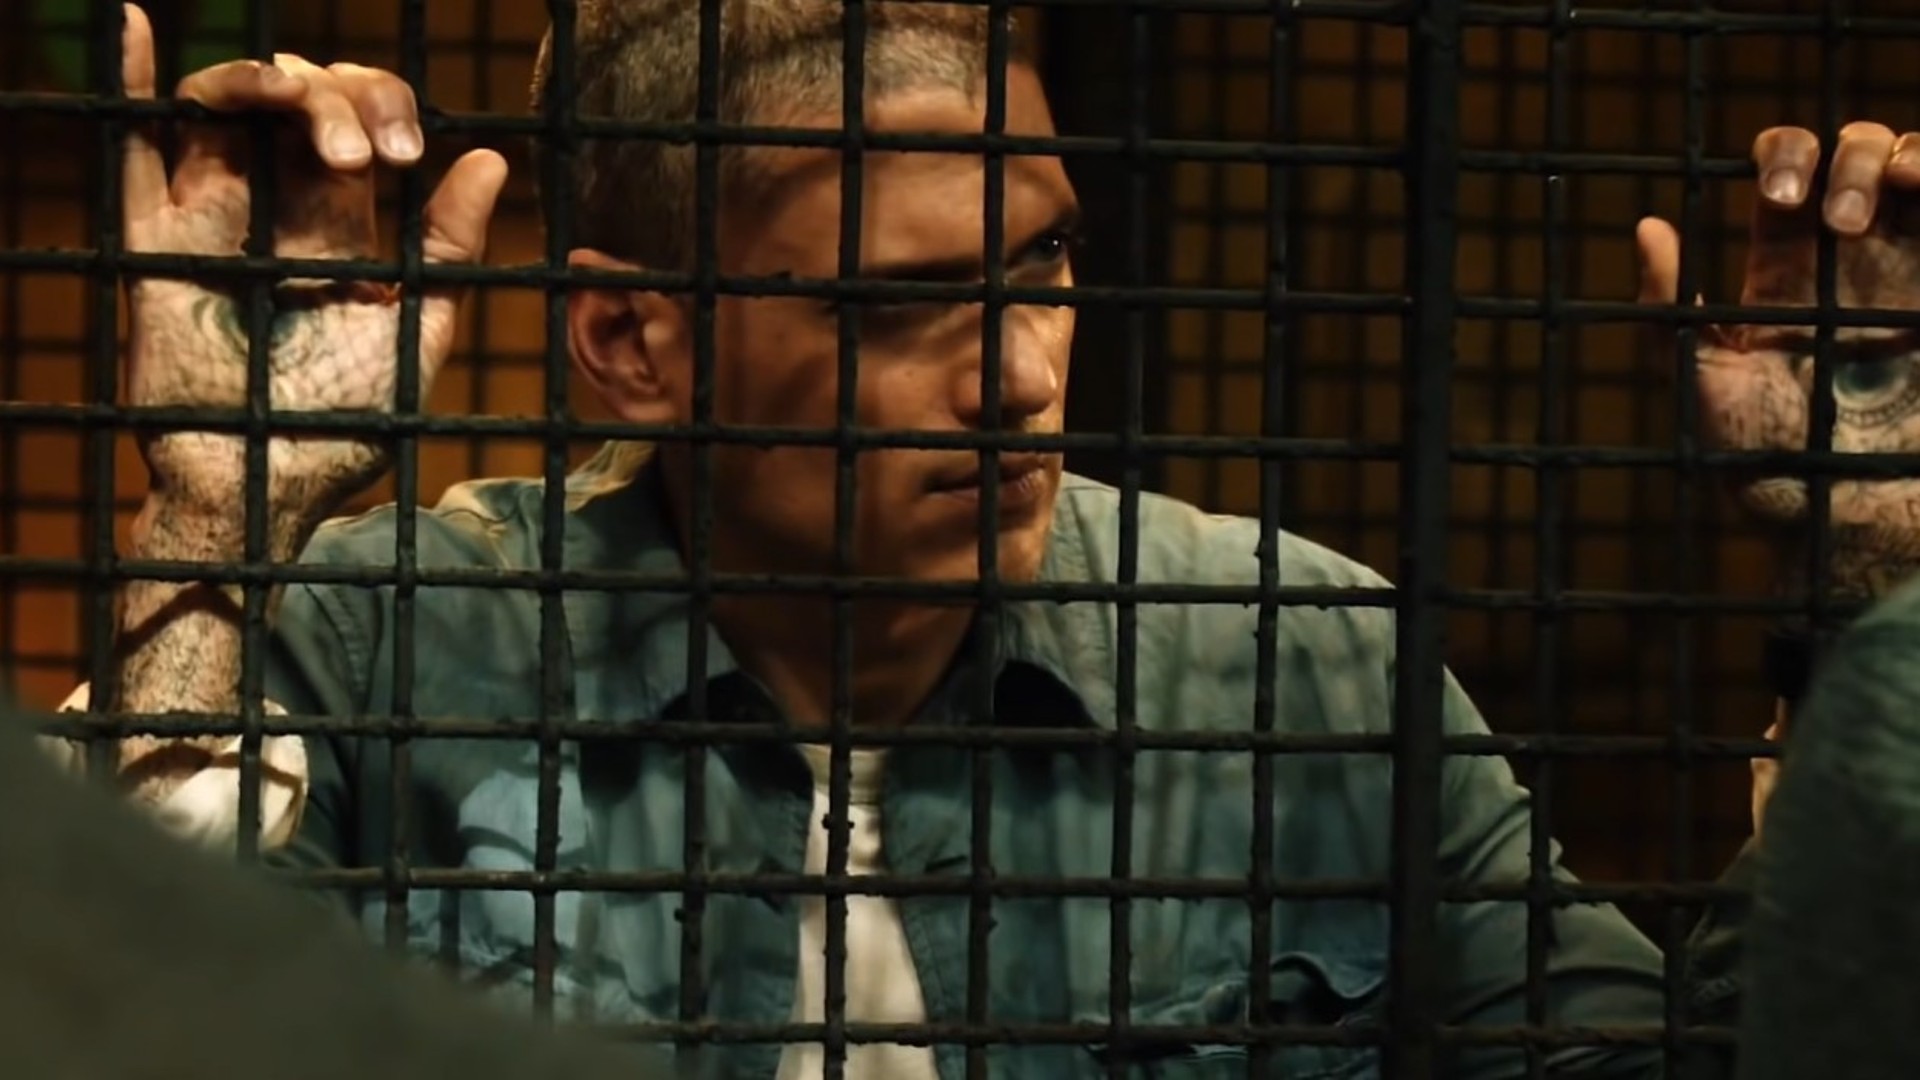 Prison Break reboot is coming to Hulu from Mayans M.C. creator